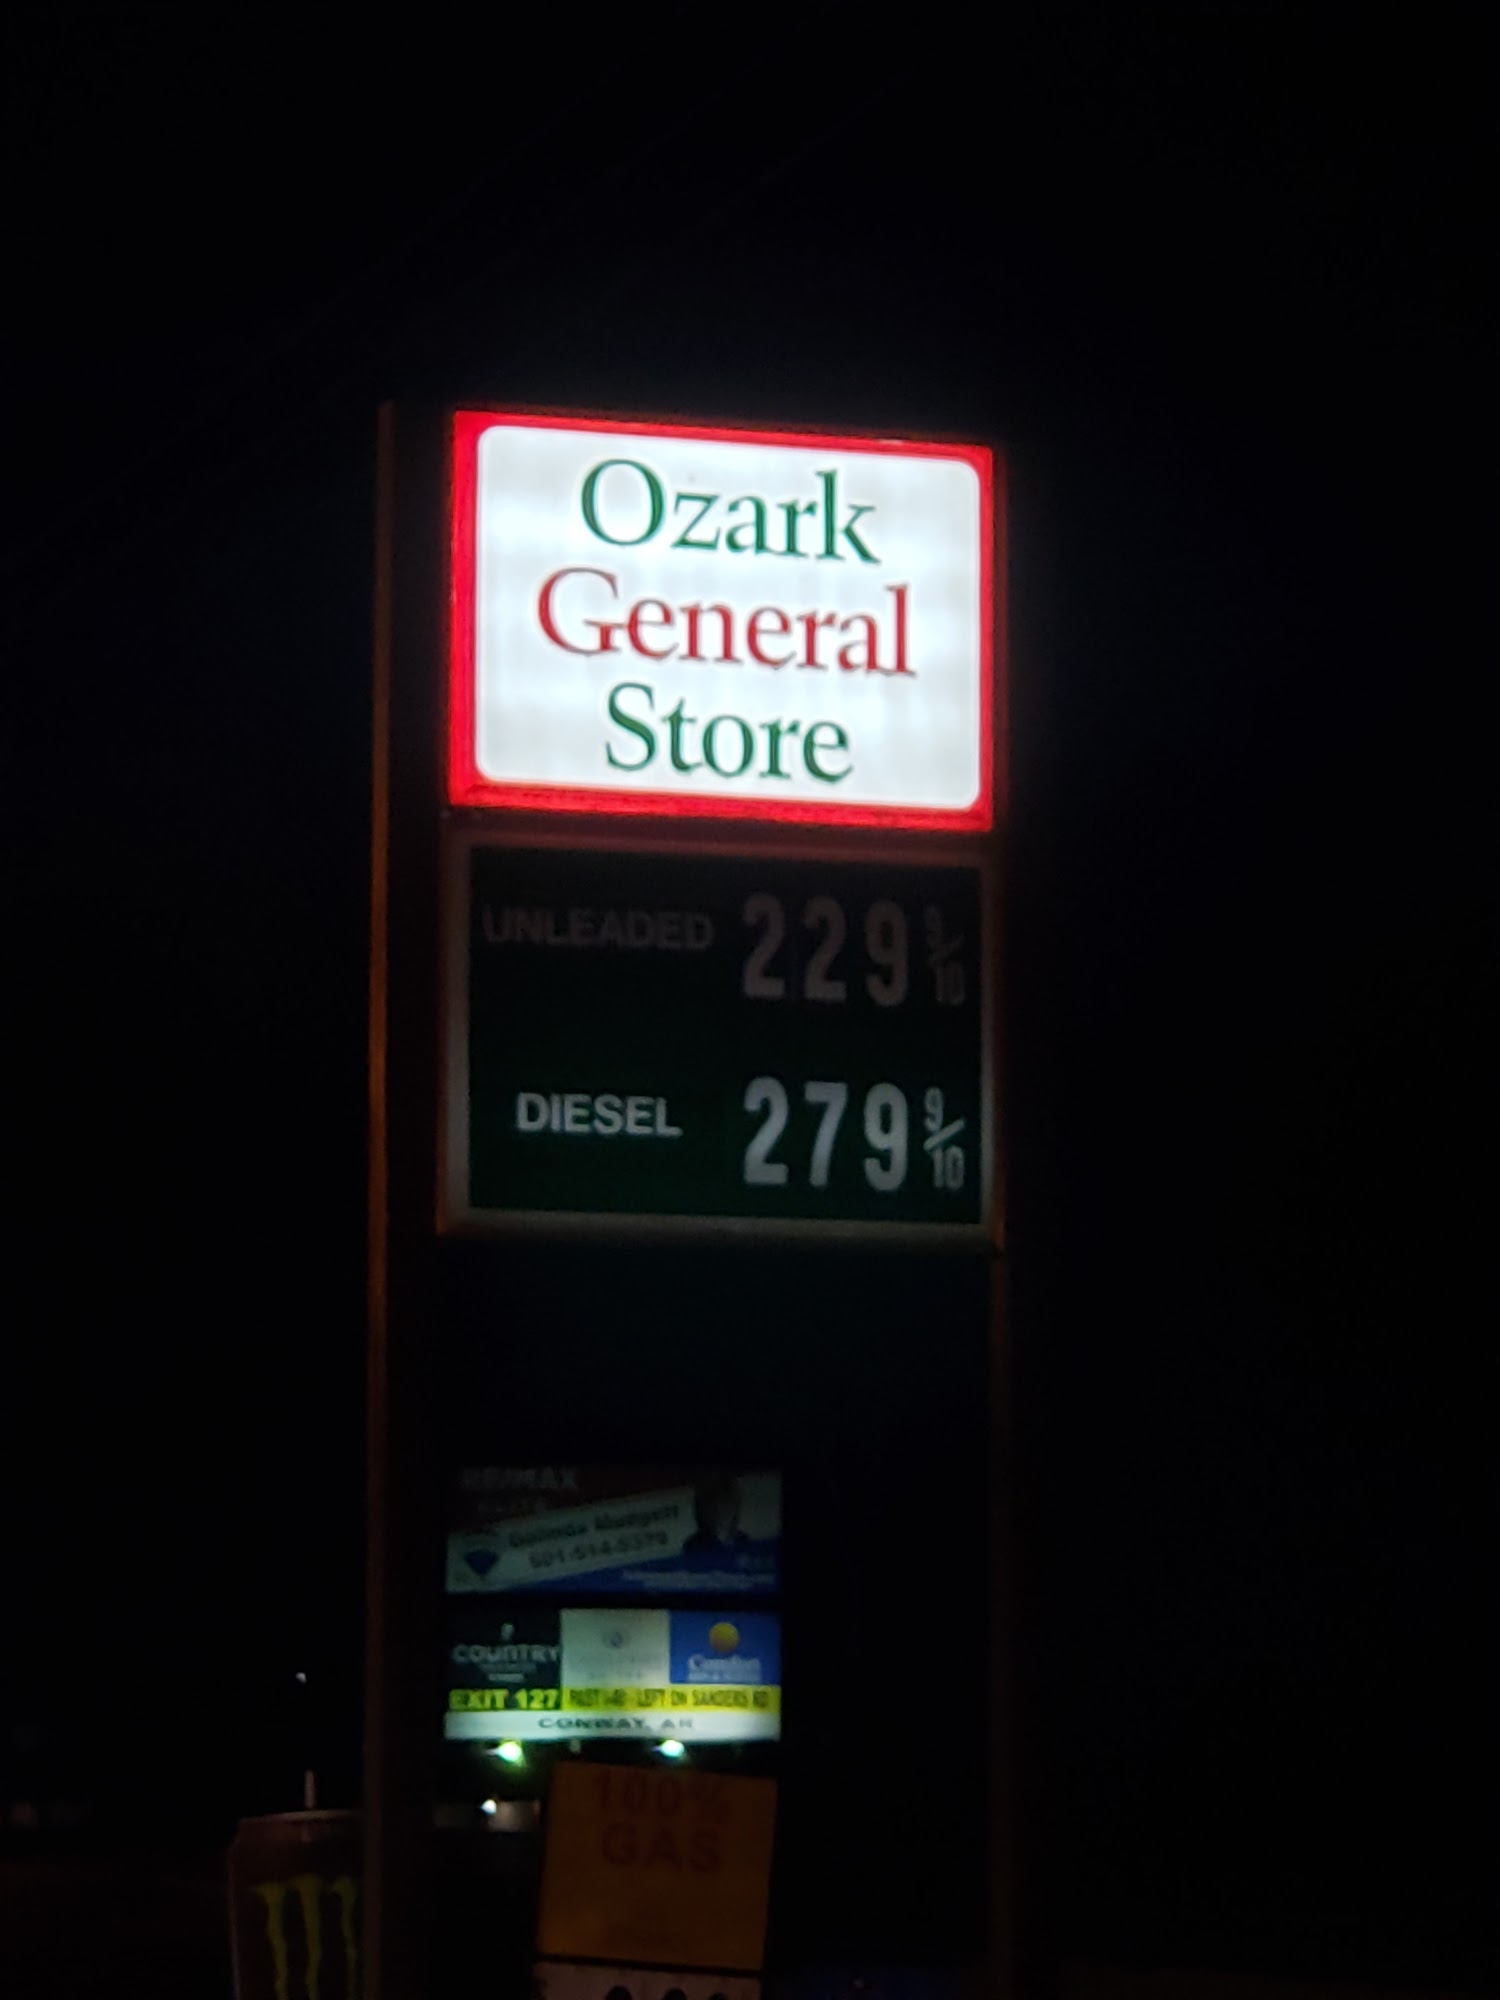 Ozark General Store